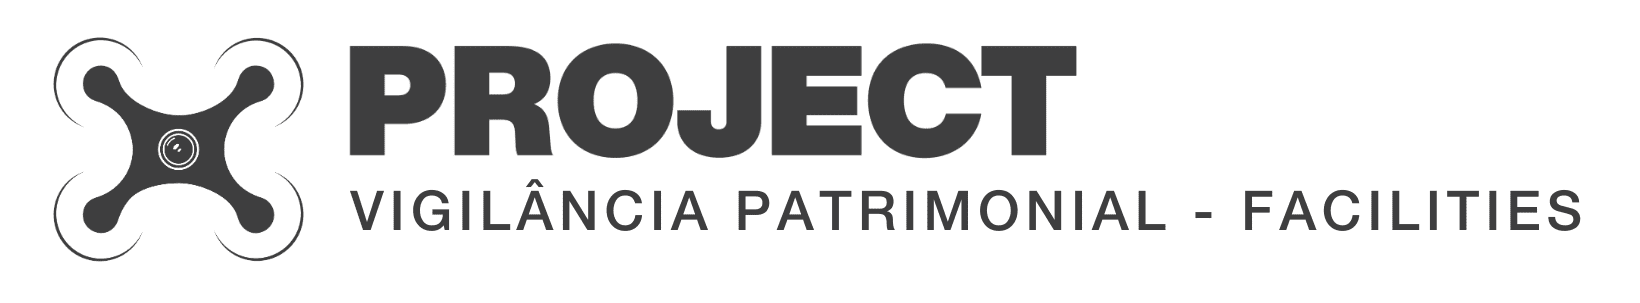 Logo Project Vigilância Patrimonial - Facilities Preta